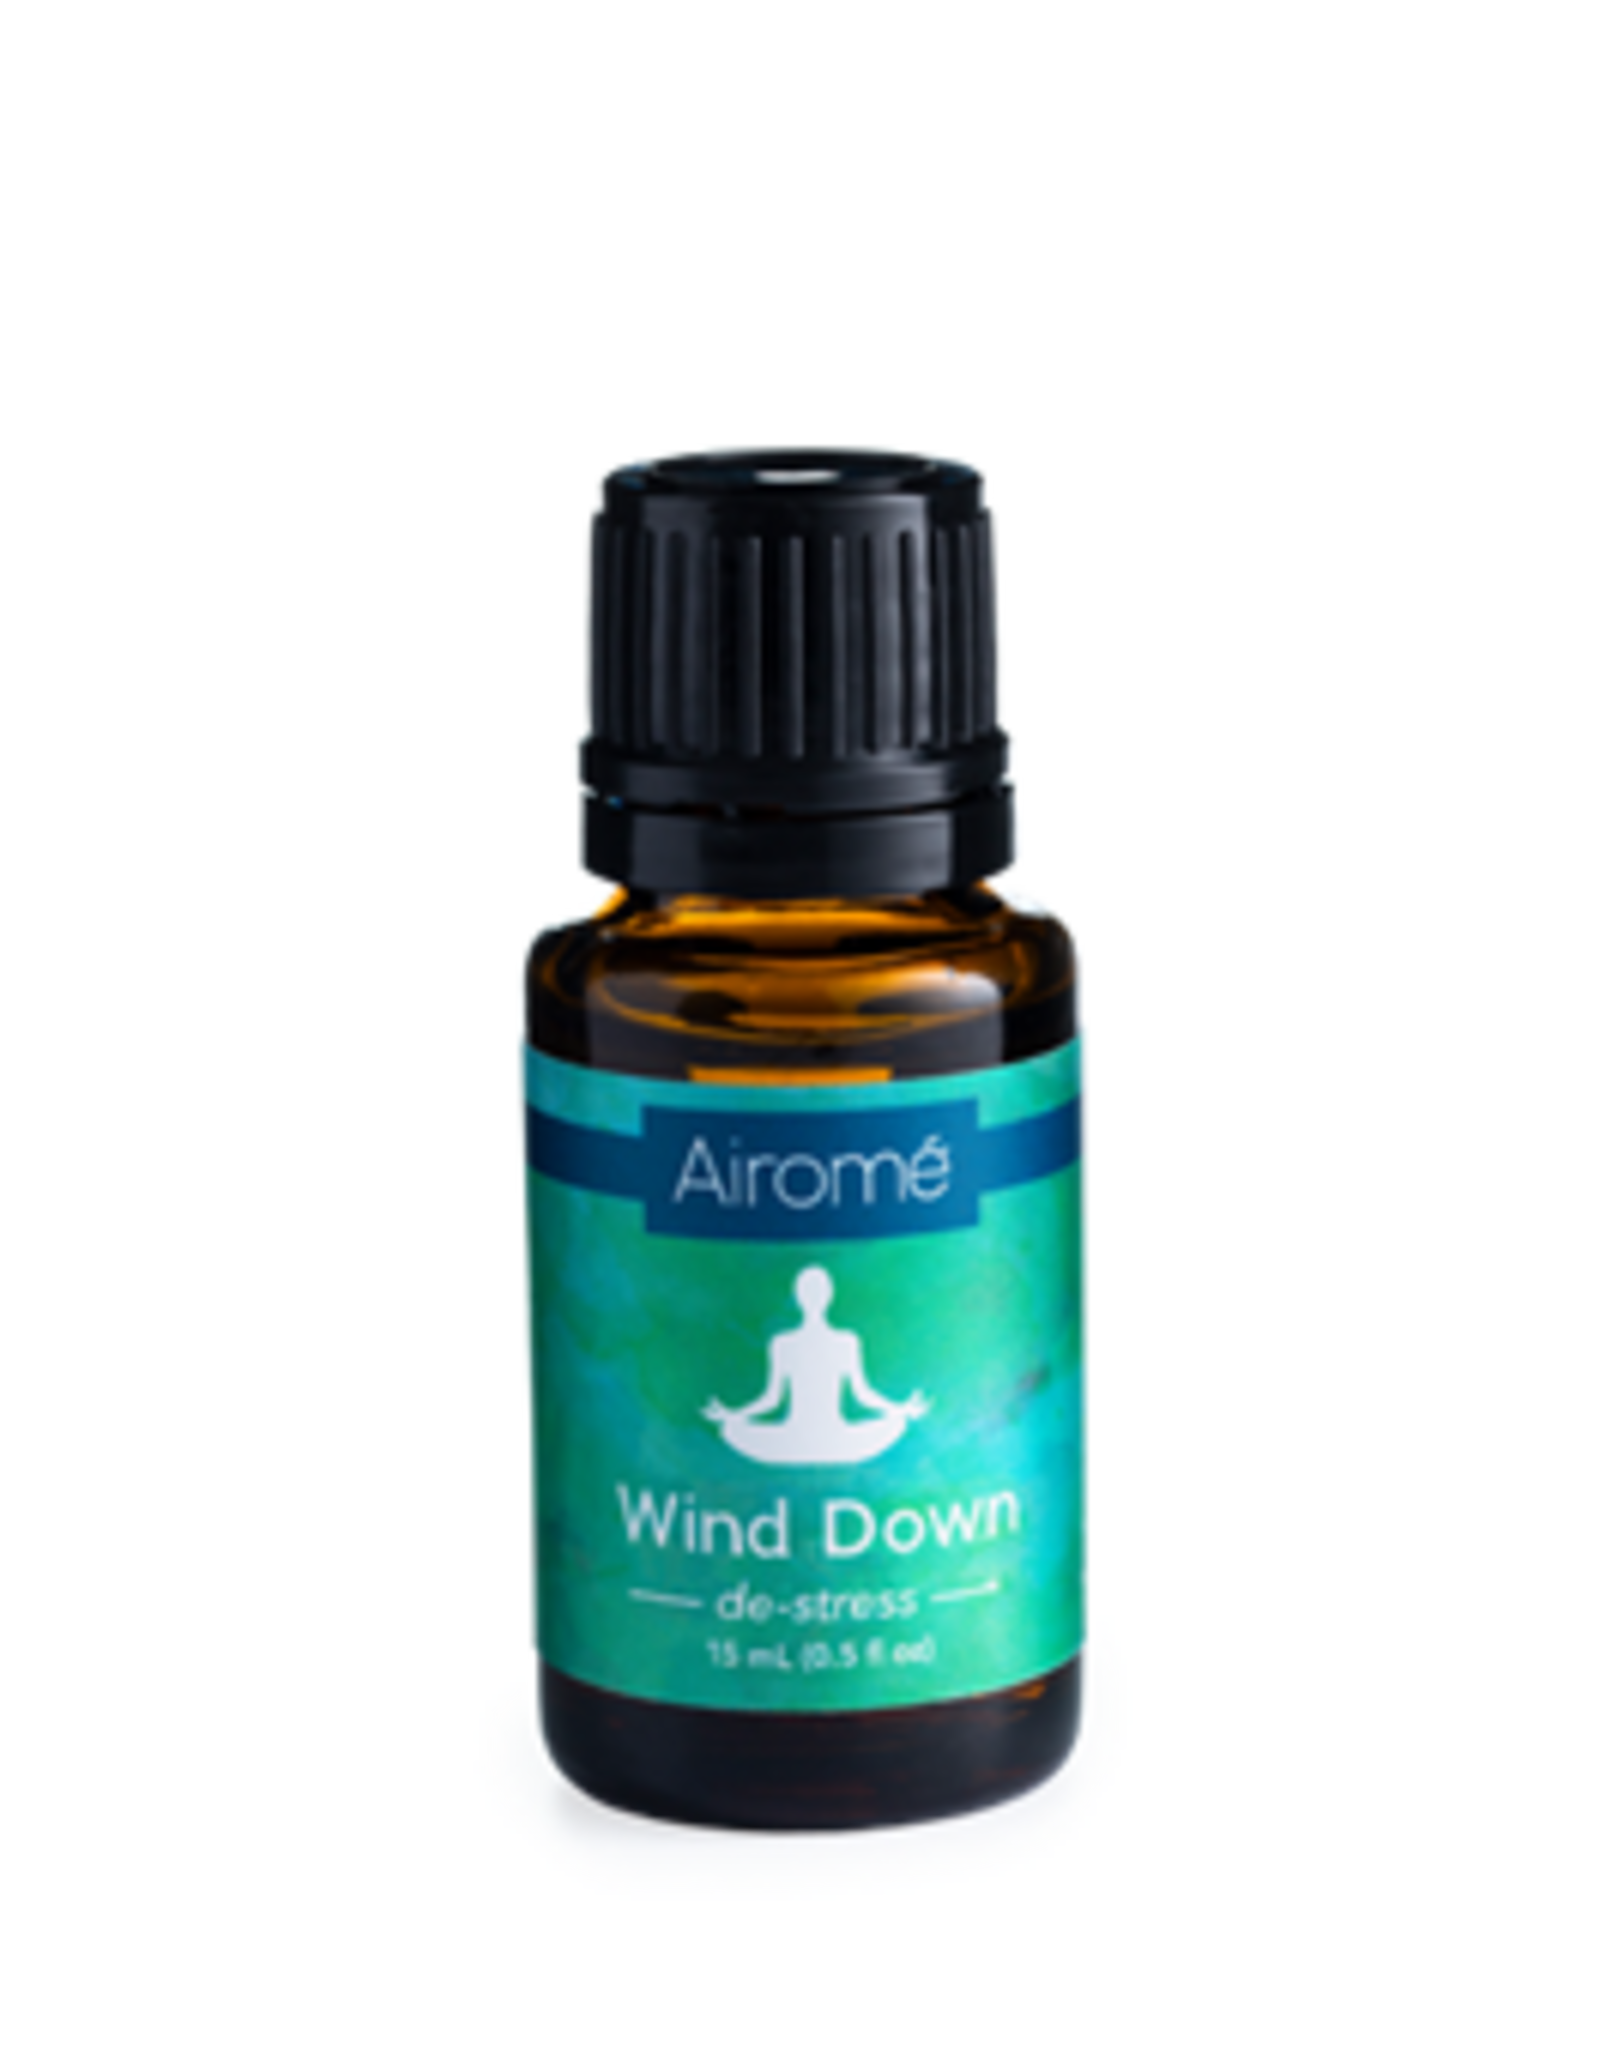 Airome Wind Down Essential Oil